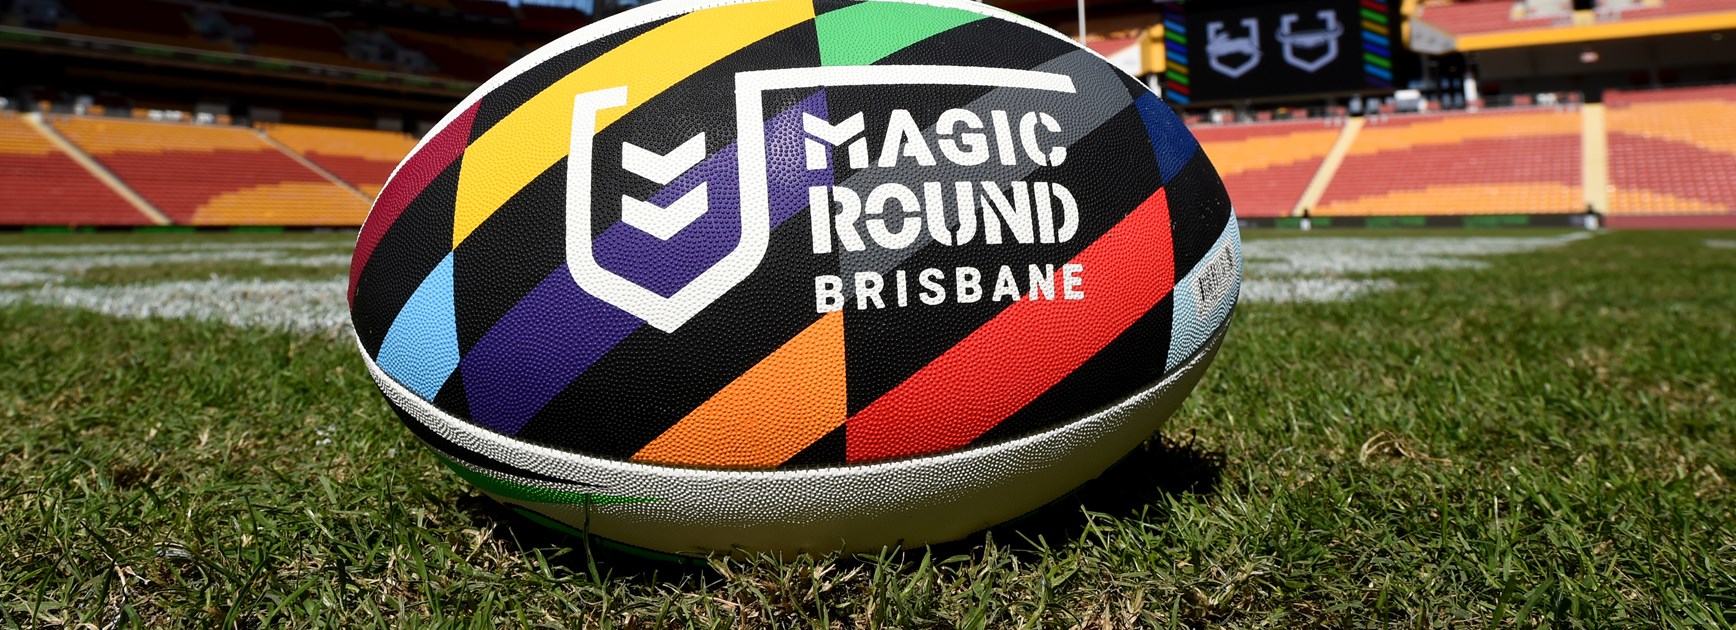 NRL cancels Magic Round Brisbane 2020